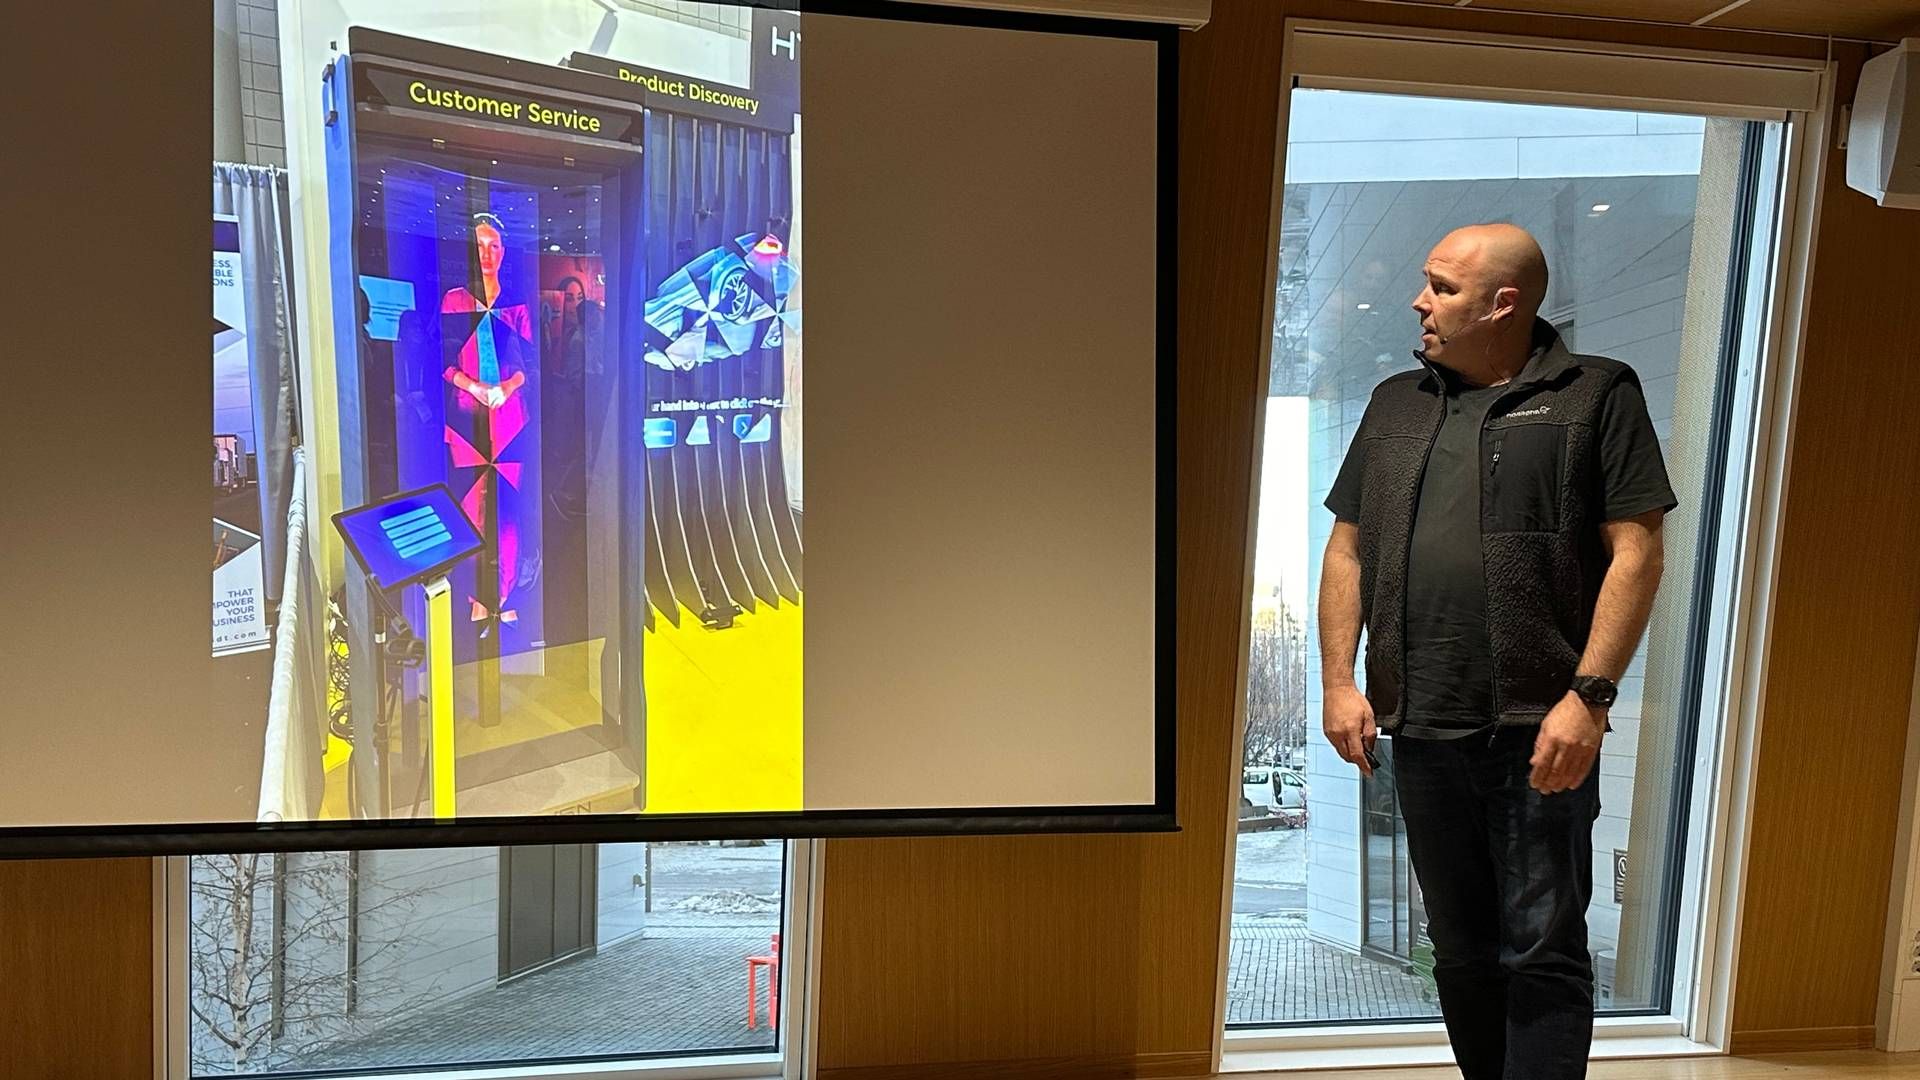 TEKNOLOGI: Et hologram kan gi kundeservice døgnet rundt, men retail-direktør Bård Kvamme i Norrøna vil heller ha mennesker i sine butikker. | Foto: Gøril Huse / HandelsWatch